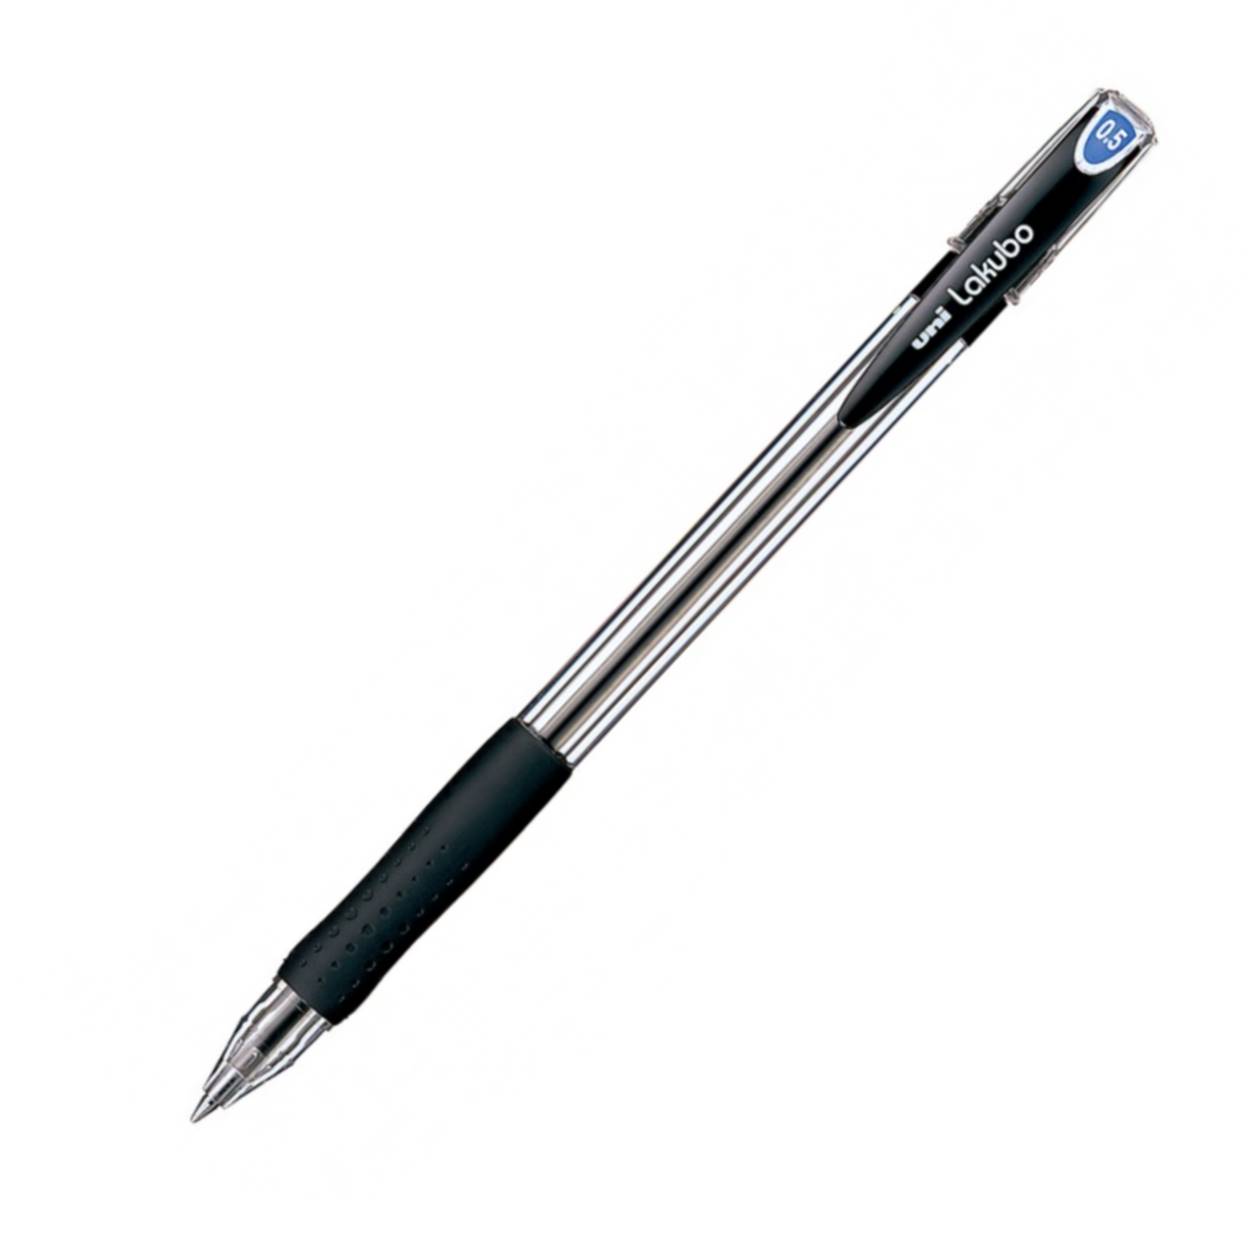 Ручки uni ball. Ручка Uni Lakubo. Uni Lakubo |0,7| шарик. Ручка Уни лакубо 0.7 шариковая. Ручка шариковая Uni Ball Lakubo (0.7mm/Black).